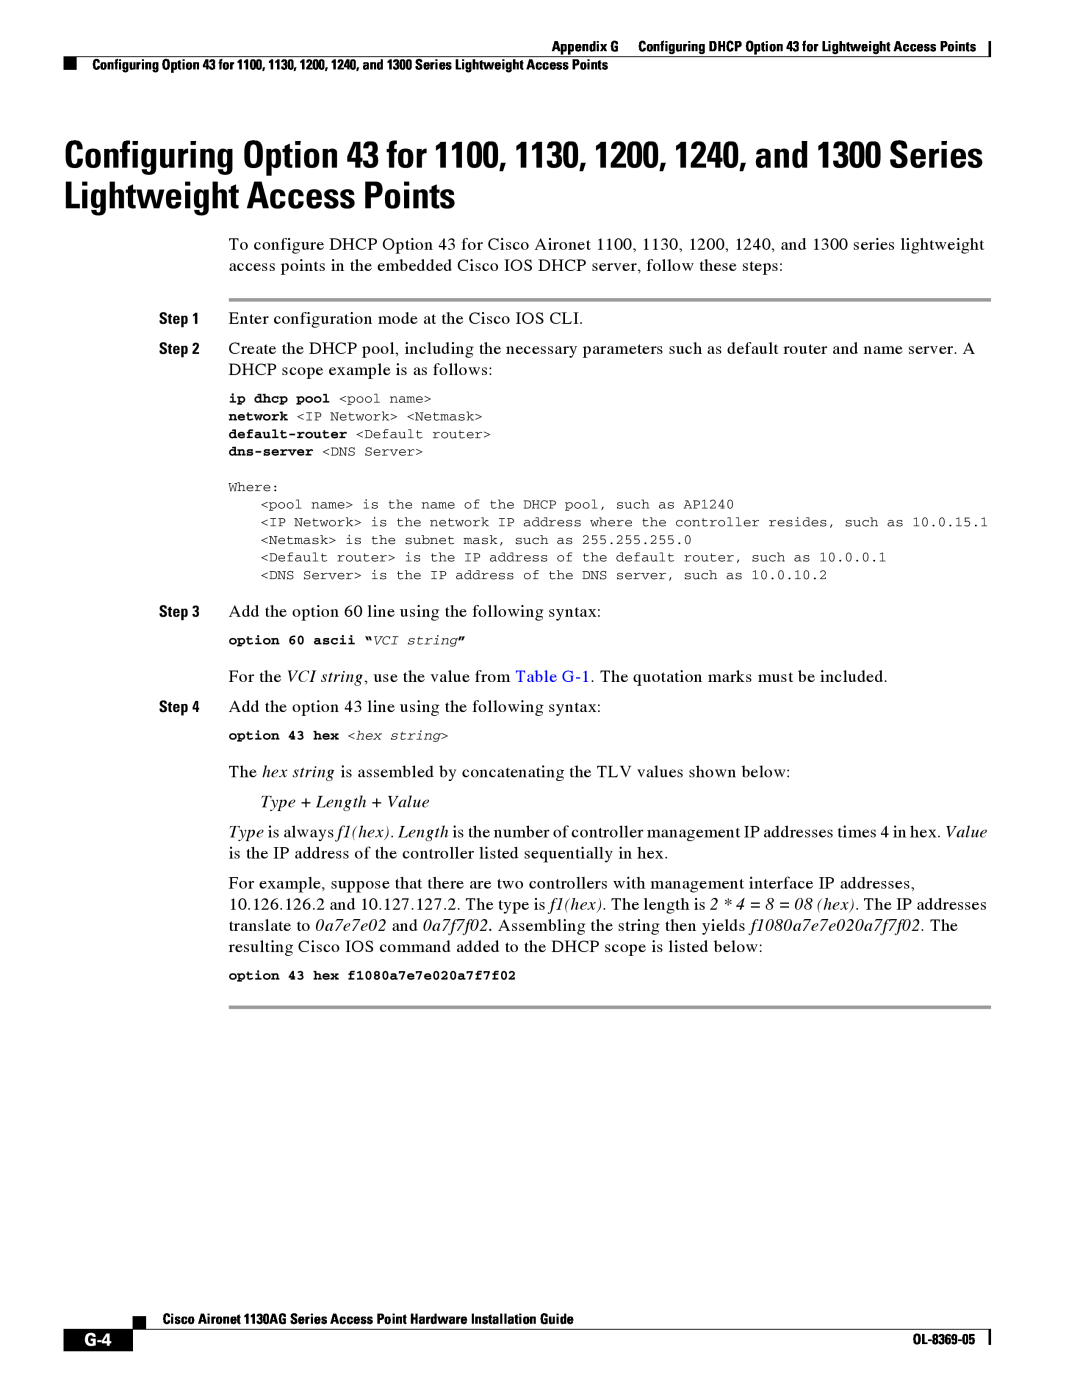 Cisco Systems 1130AG manual Type + Length + Value 